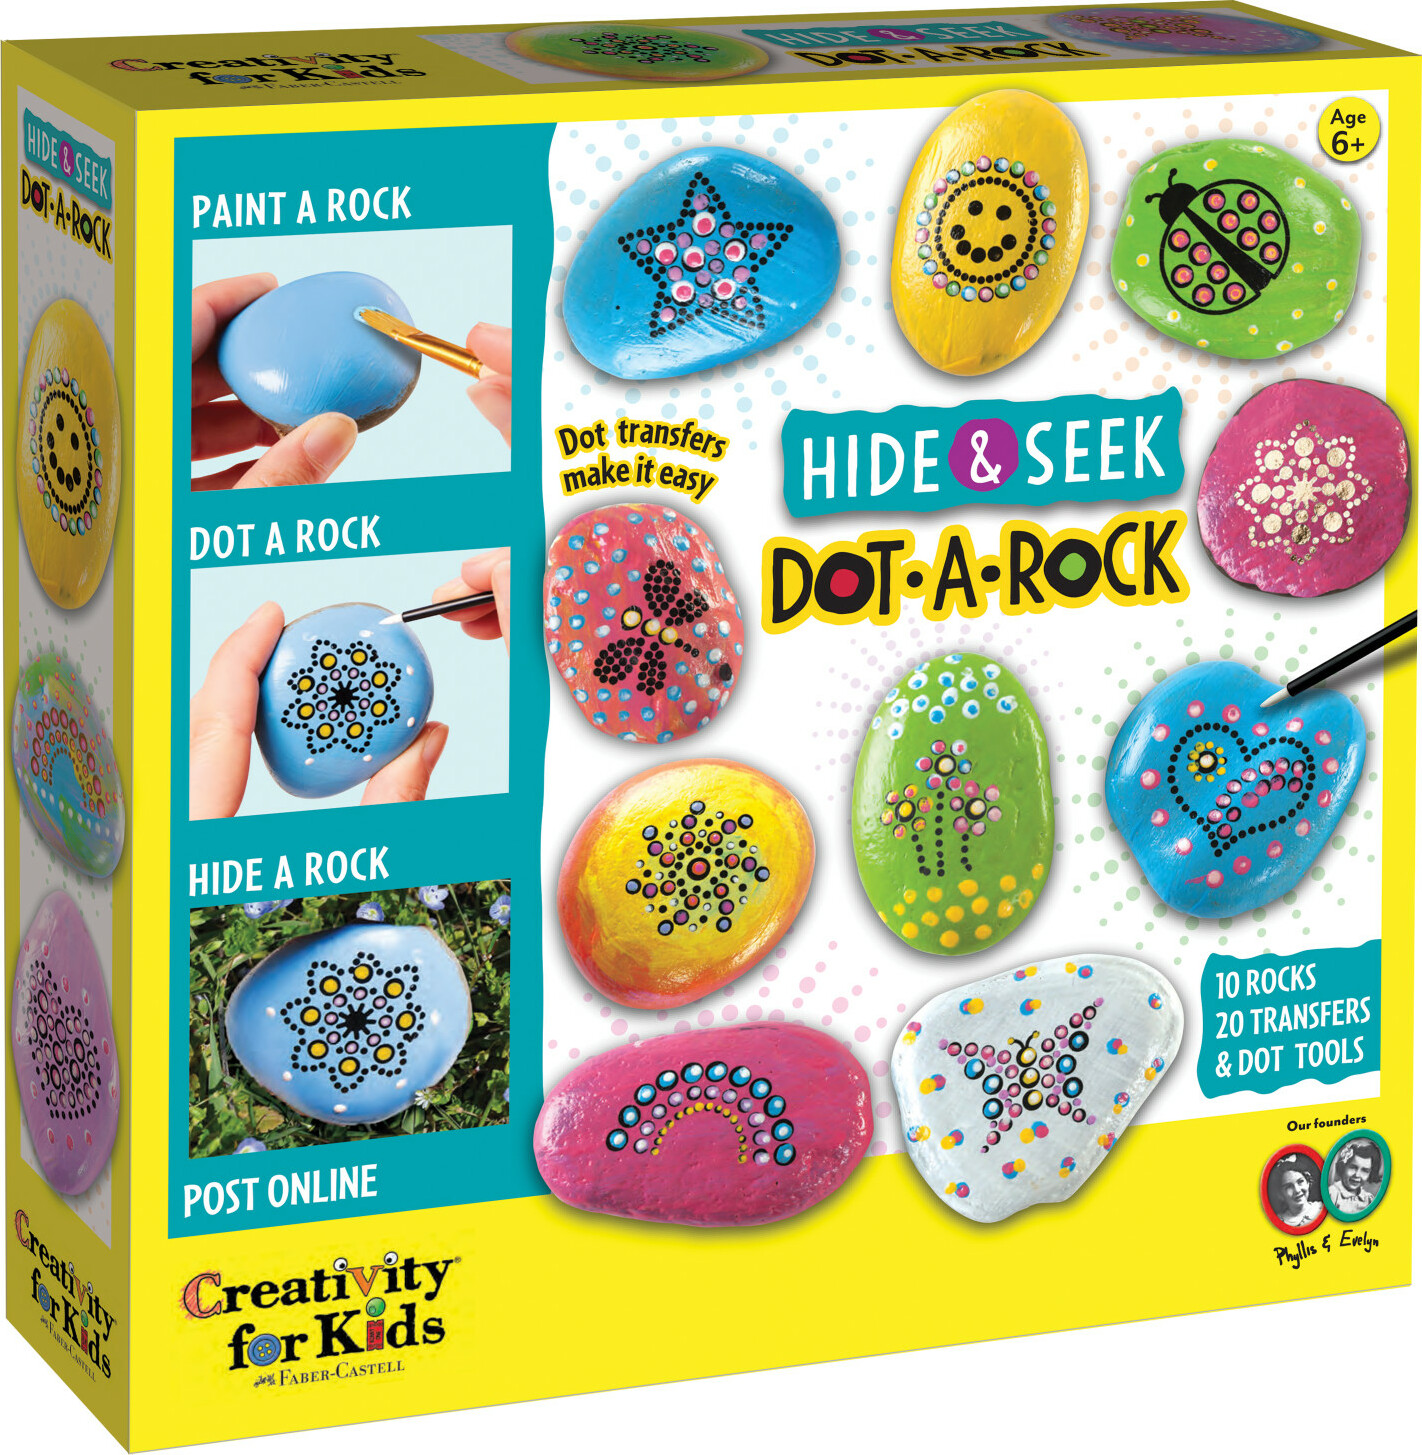 Hide & Seek Dot-a-Rock Painting Kit - Imagination Toys